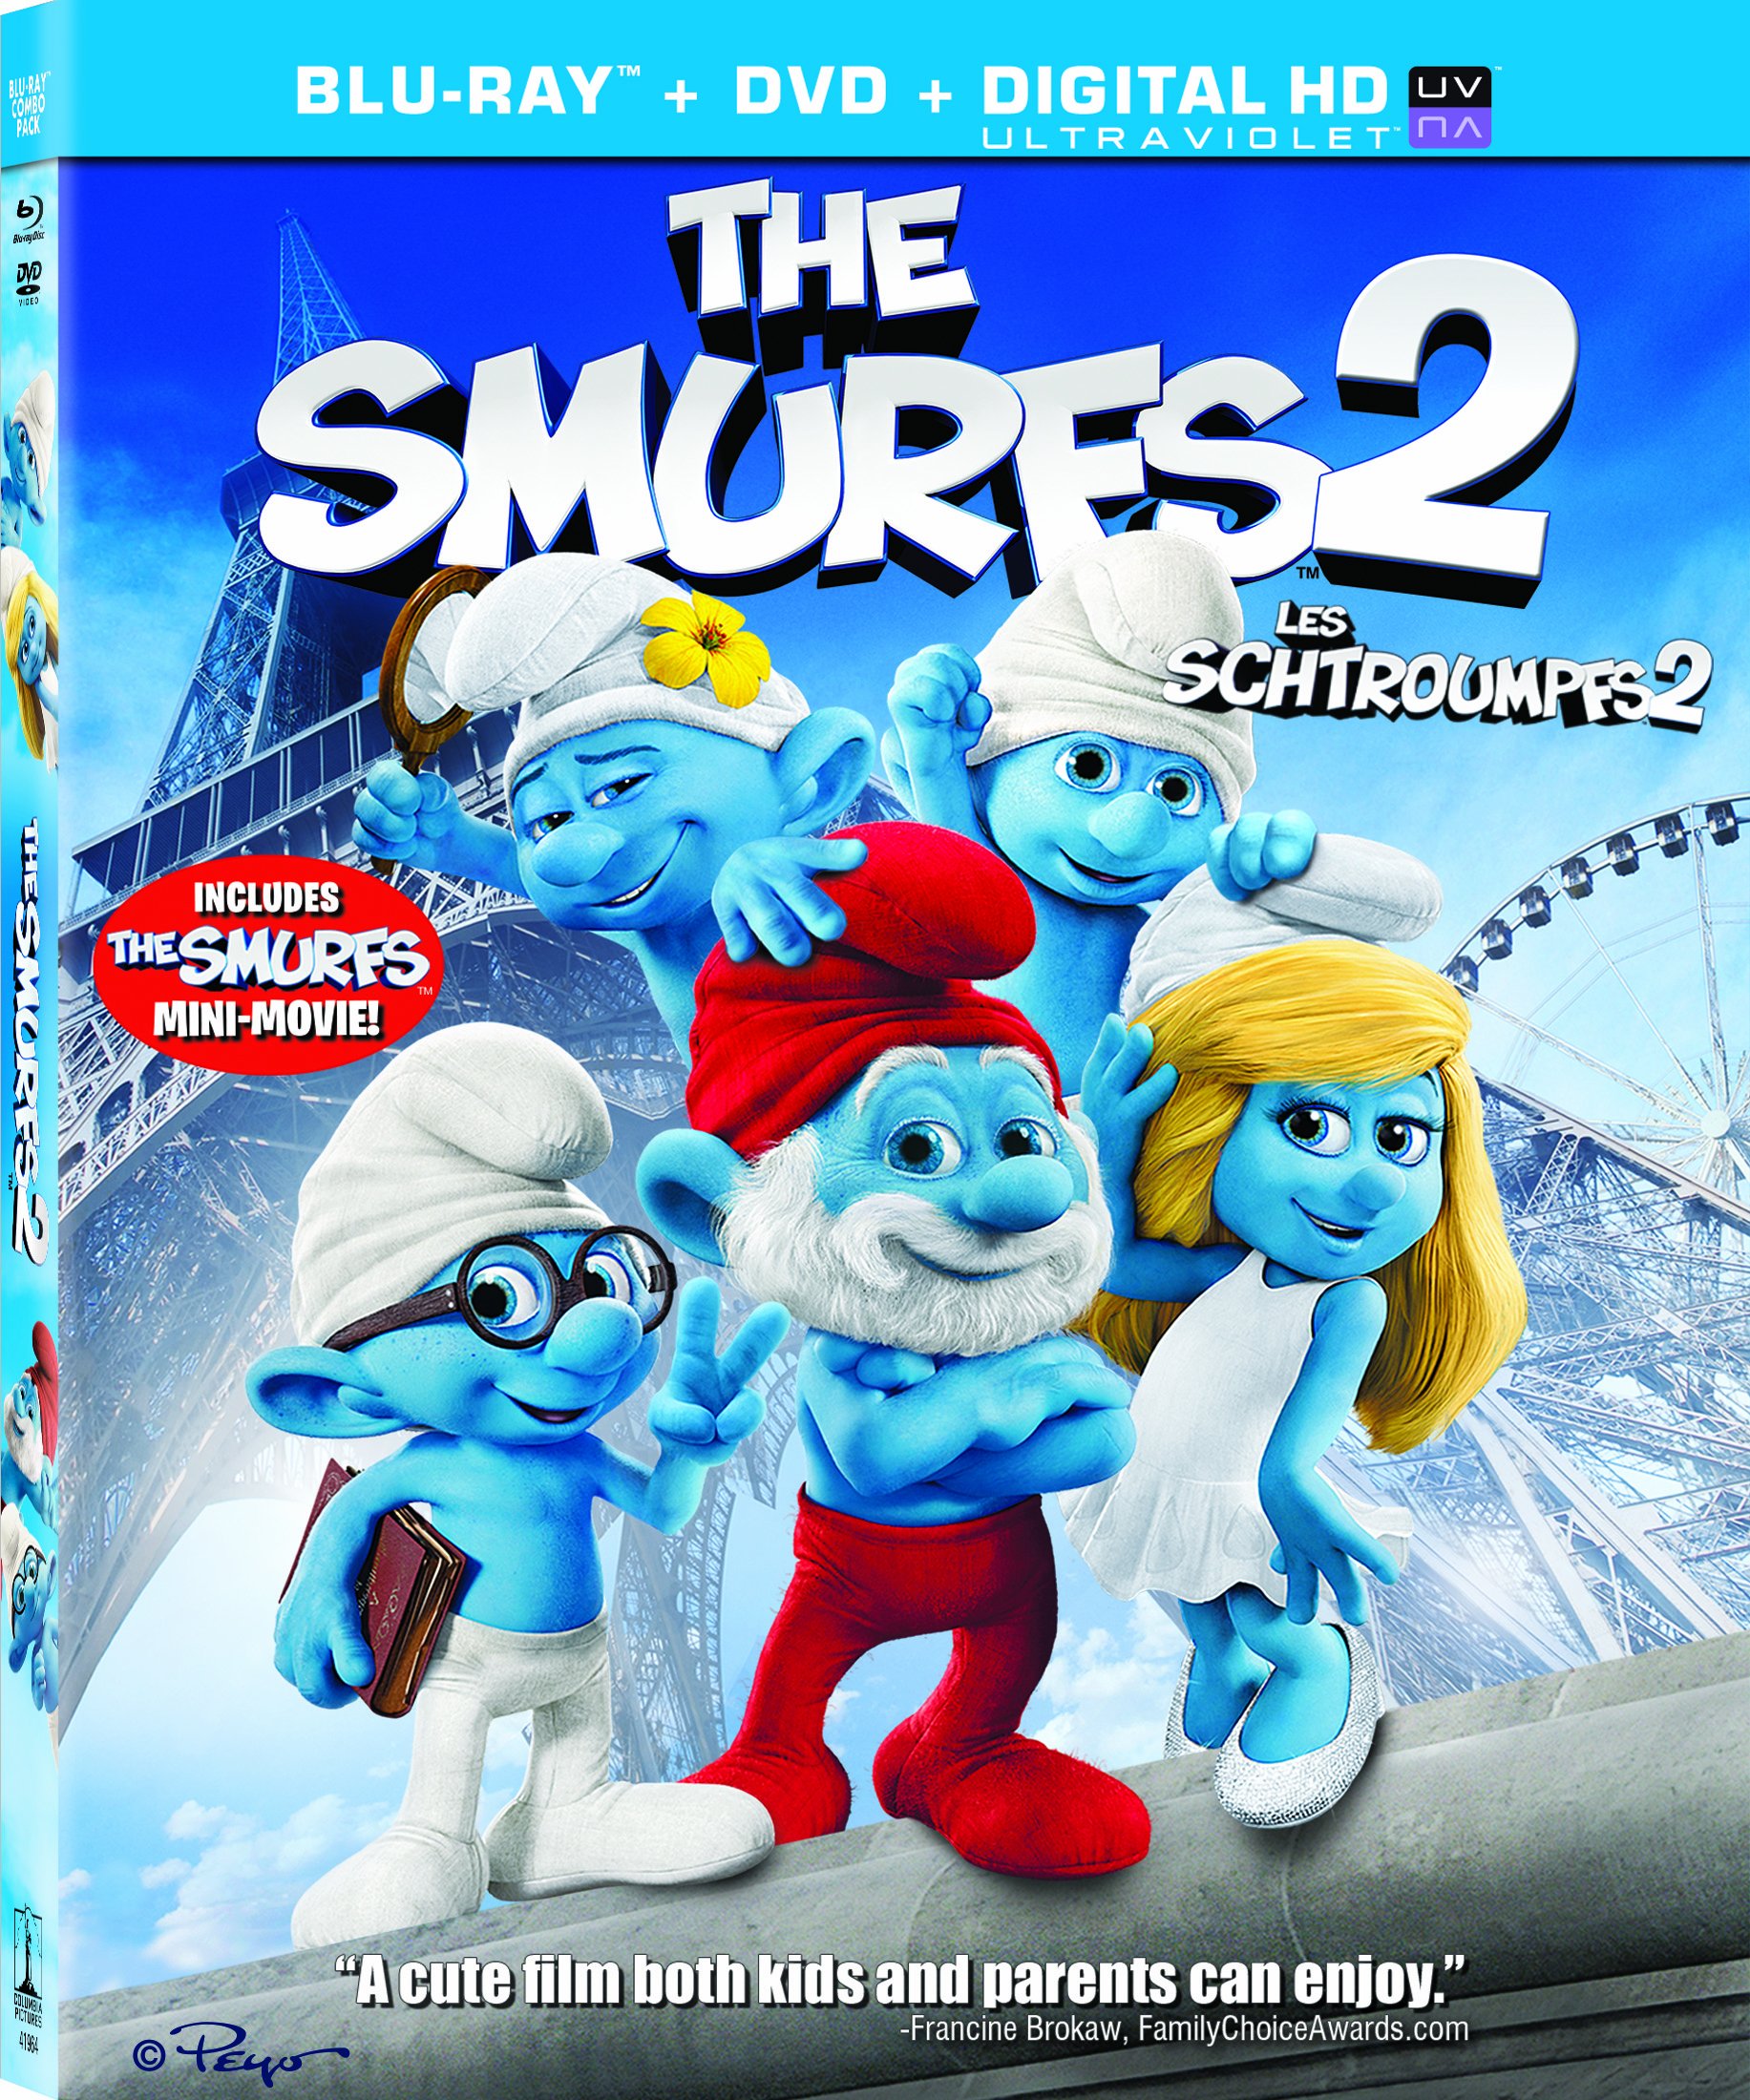 Smurfs 2 / Schtroumpfs 2 (Bilingual) [Blu-ray + DVD + UltraViolet] on MovieShack